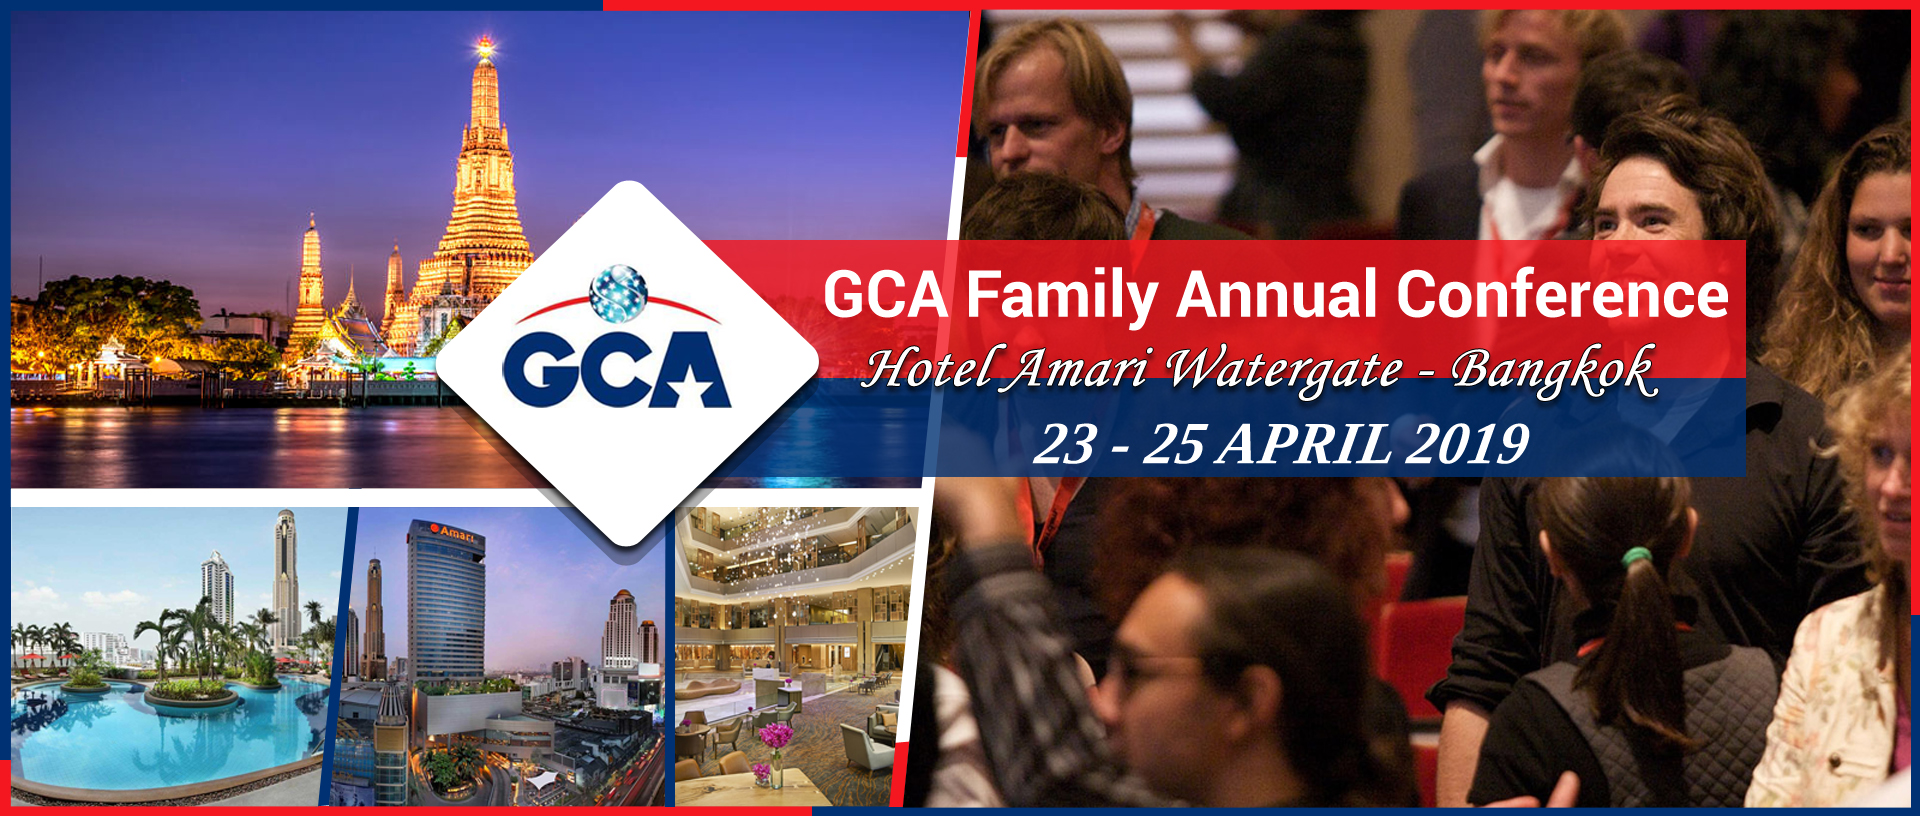 GCA Family Annual Conference 2019, Hotel Amari Watergate, Bangkok, Thailand